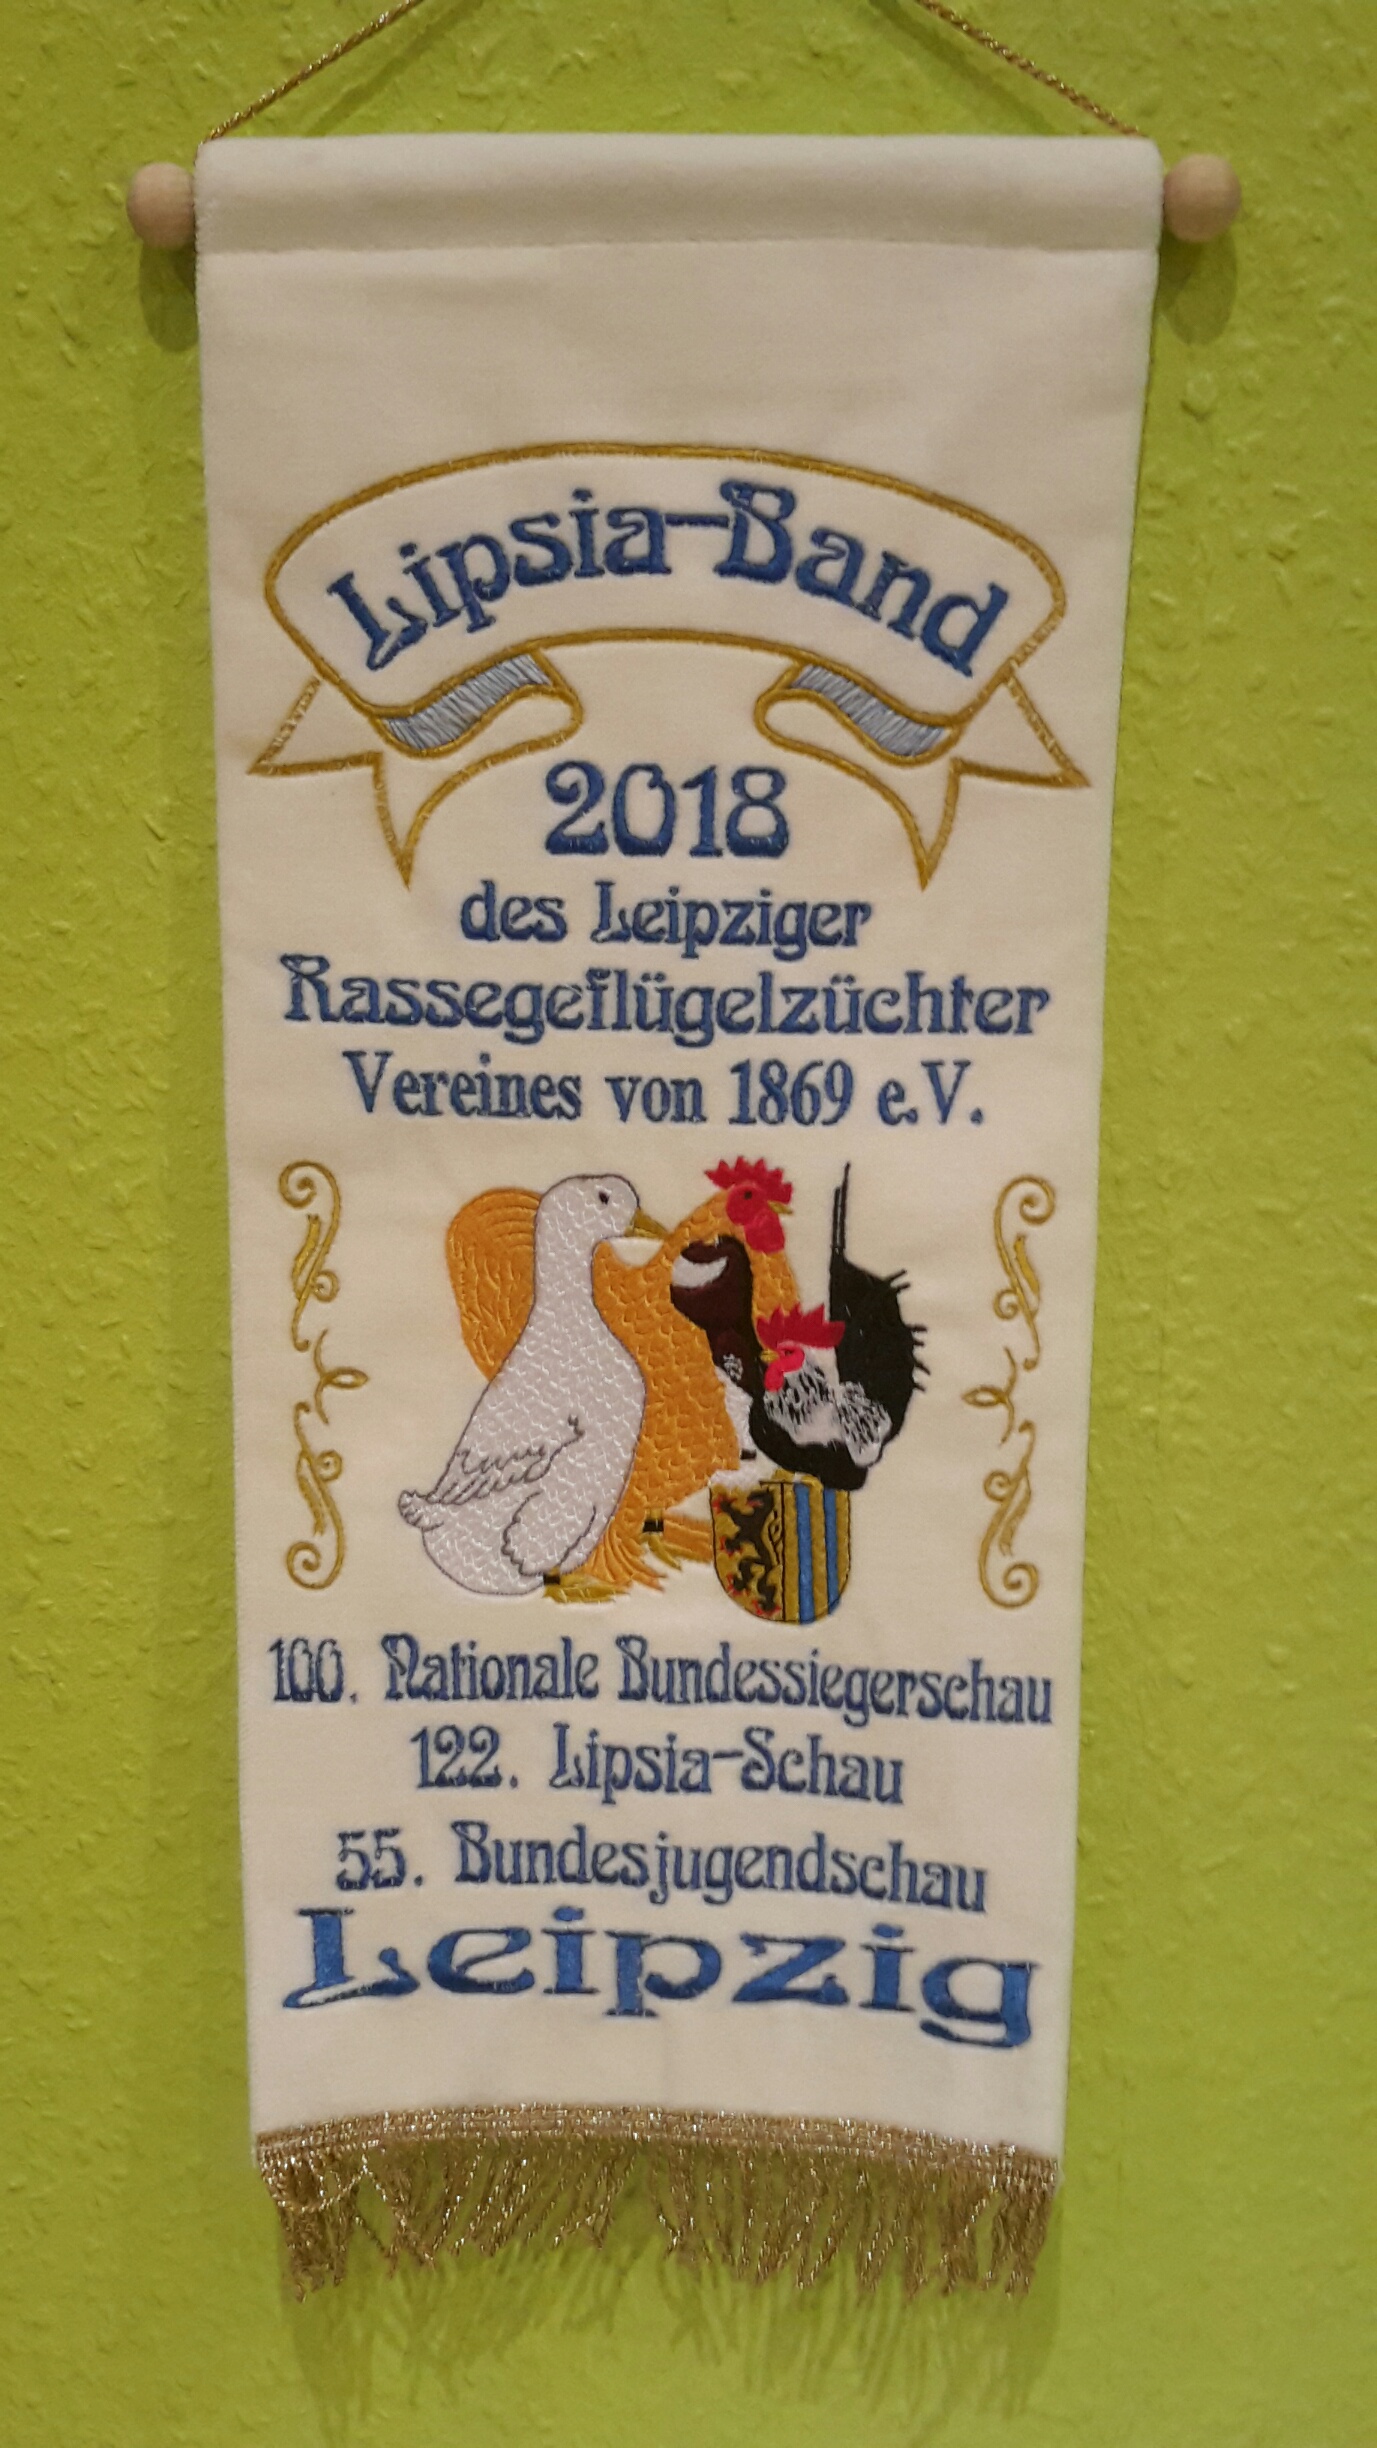 Leipziger Band 2018